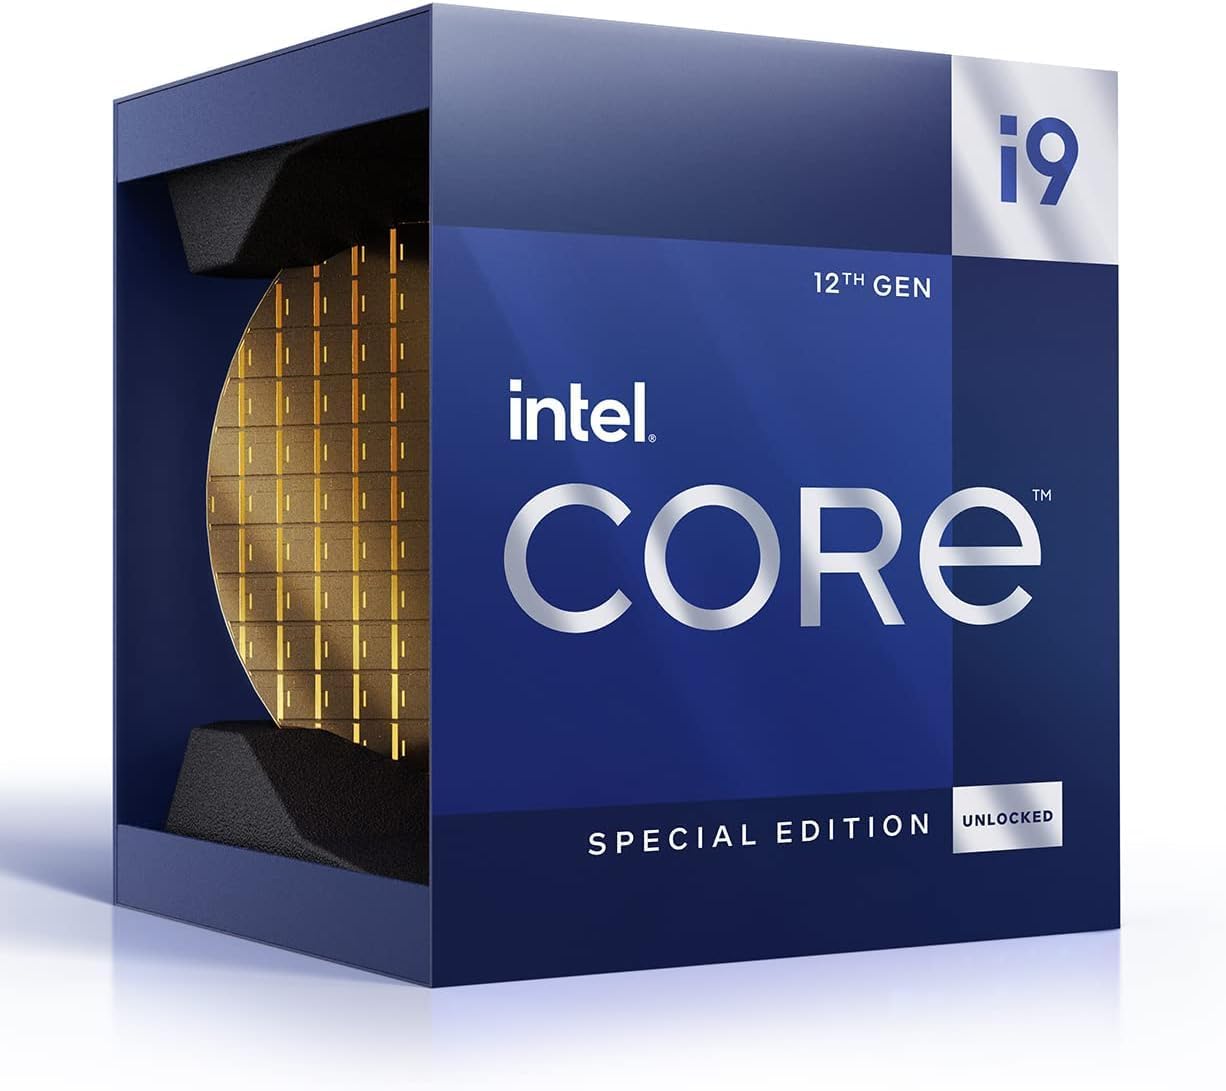 Intel Core i9-12900KS 16-Core 2.50GHz Gaming Desktop Processor $339.99 + Free Shipping